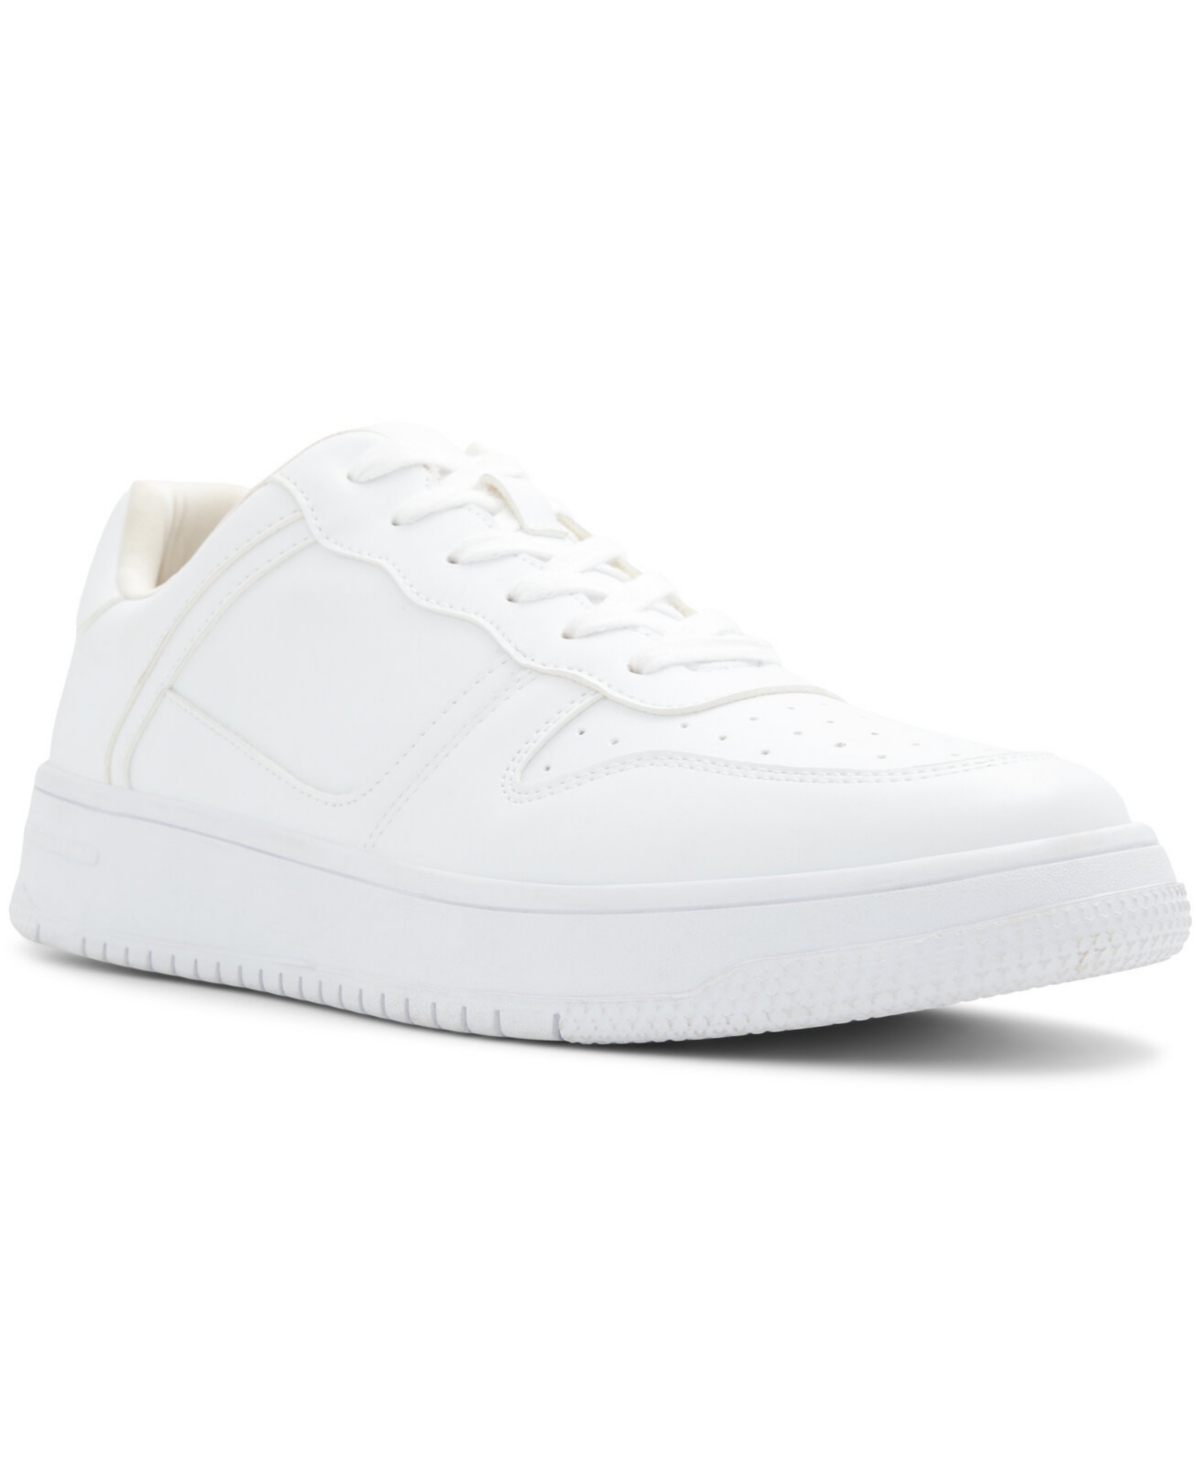 Men's Freshh H Fashion Athletics Sneakers - White